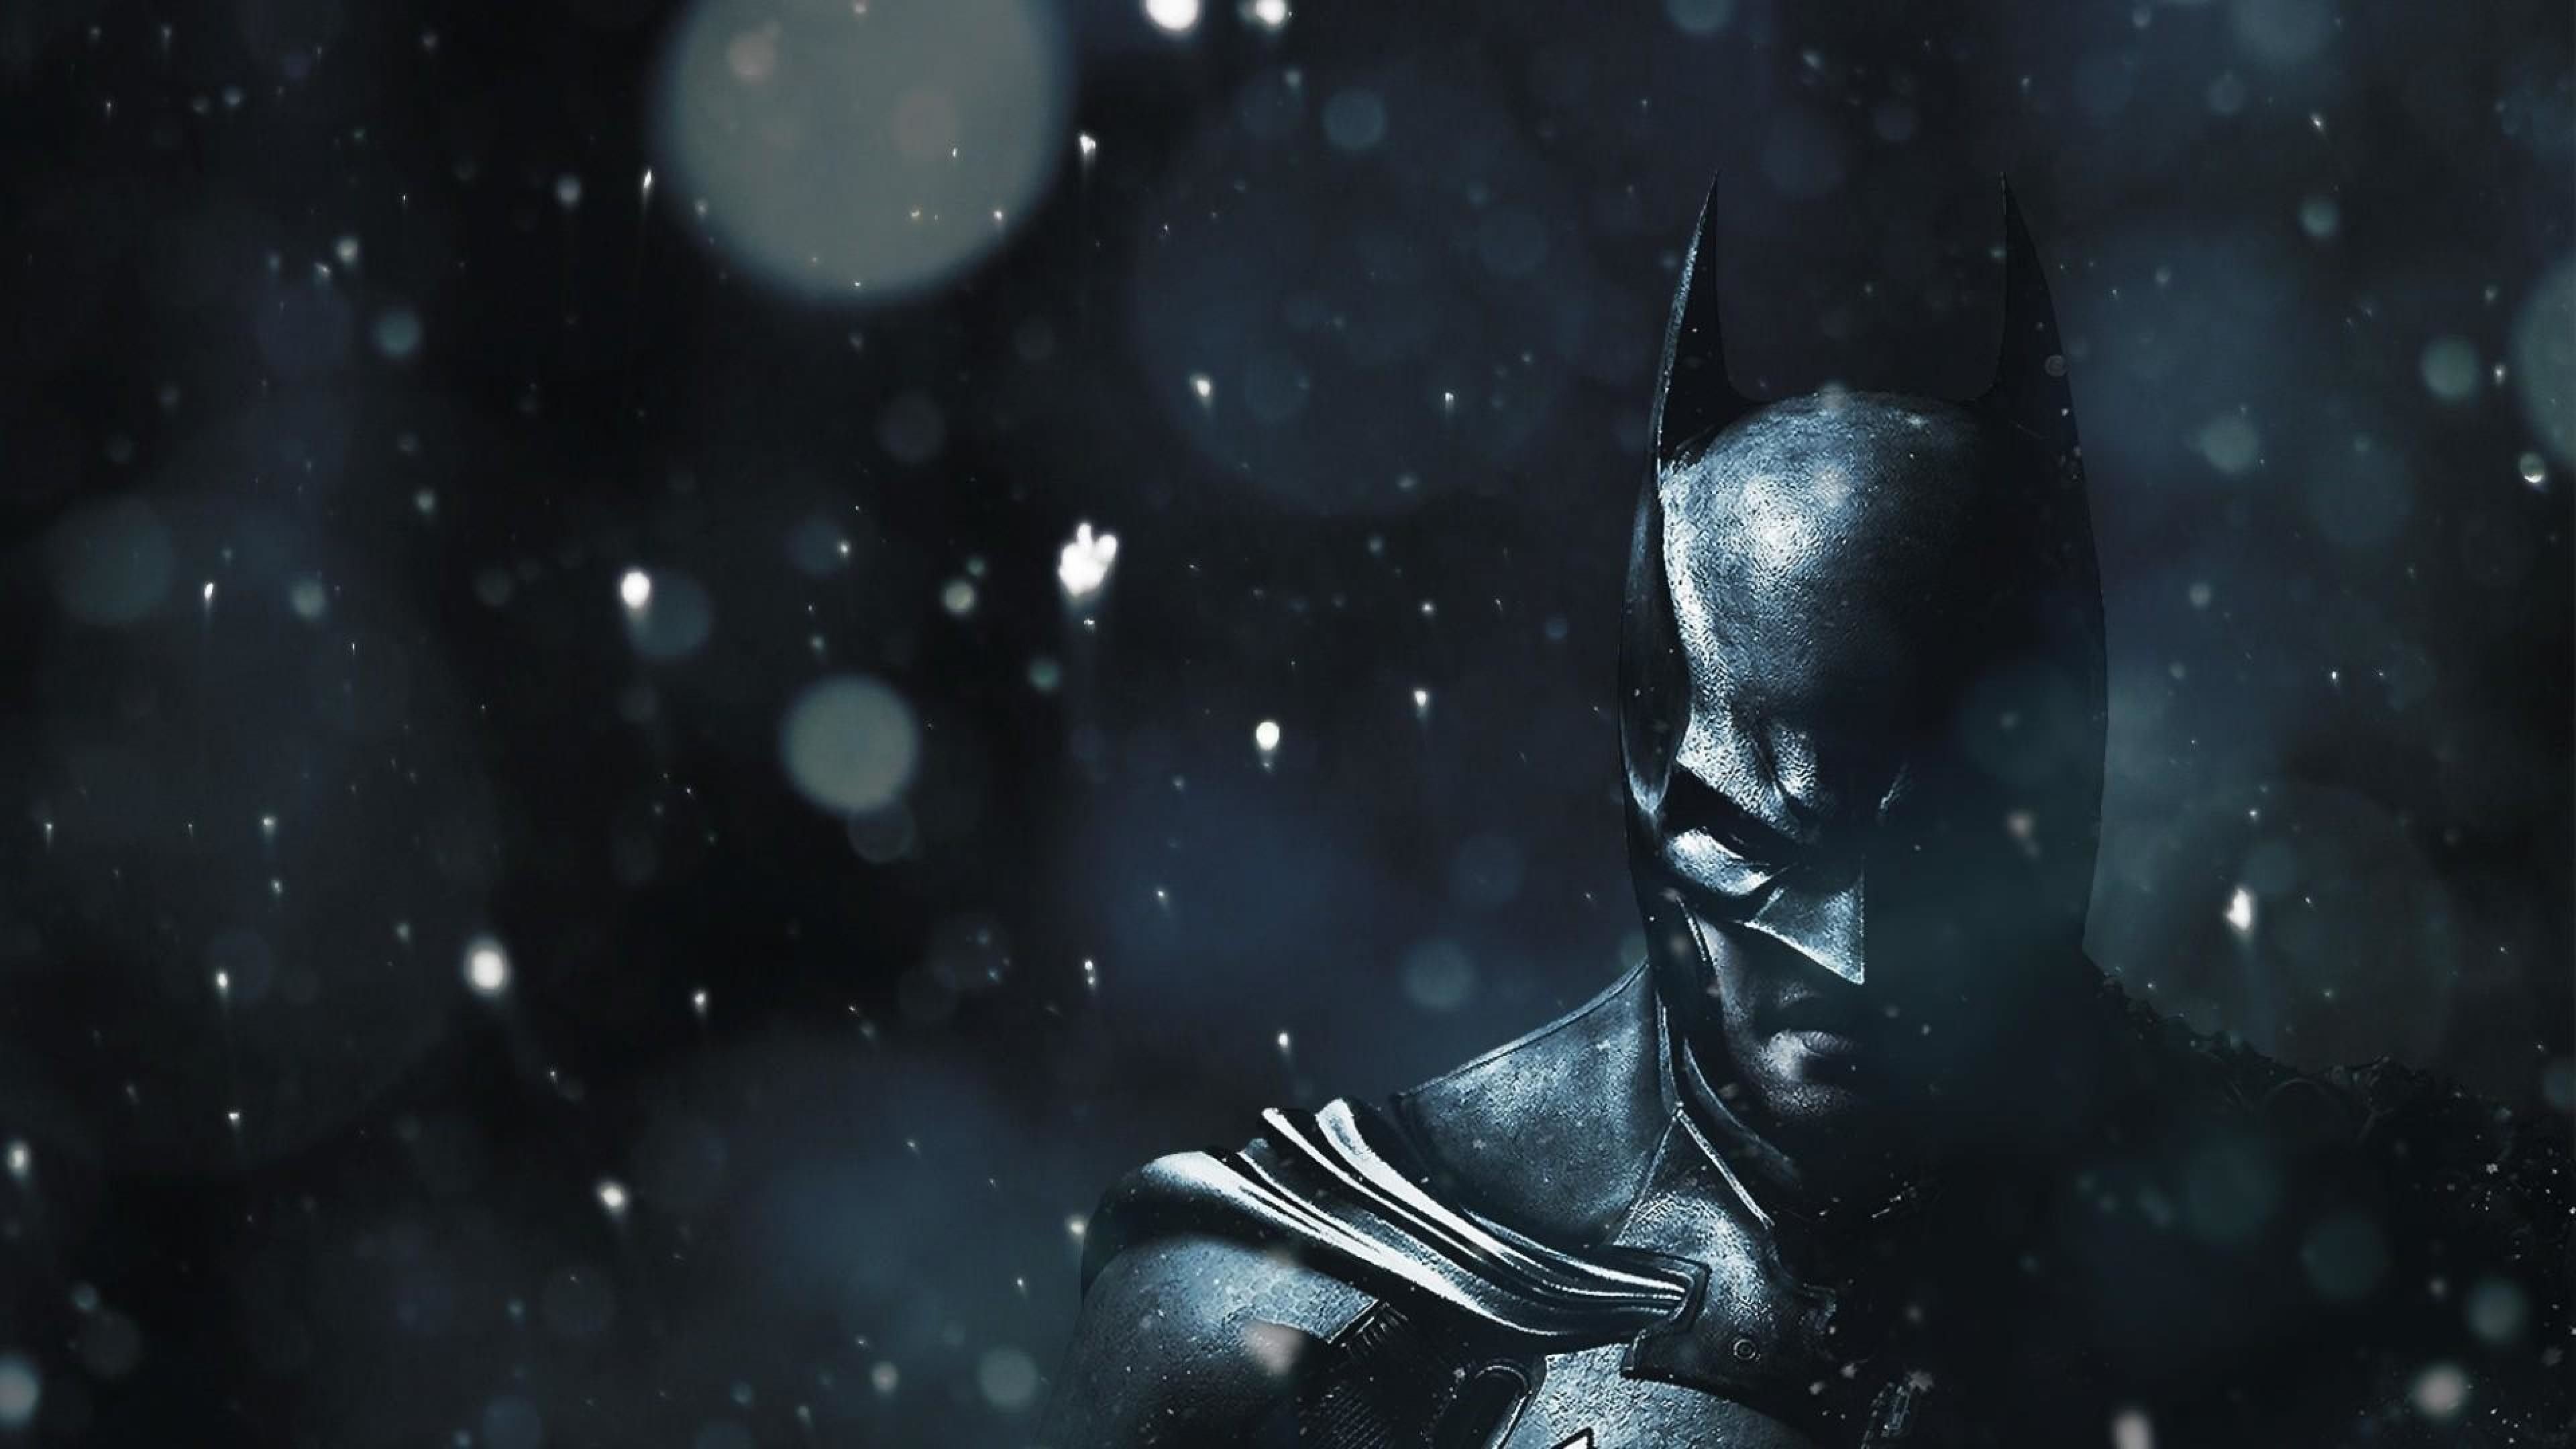 Batman HD Wallpaper, Desktop Background, Mobile Wallpaper. Batman wallpaper, Batman arkham origins, Batman